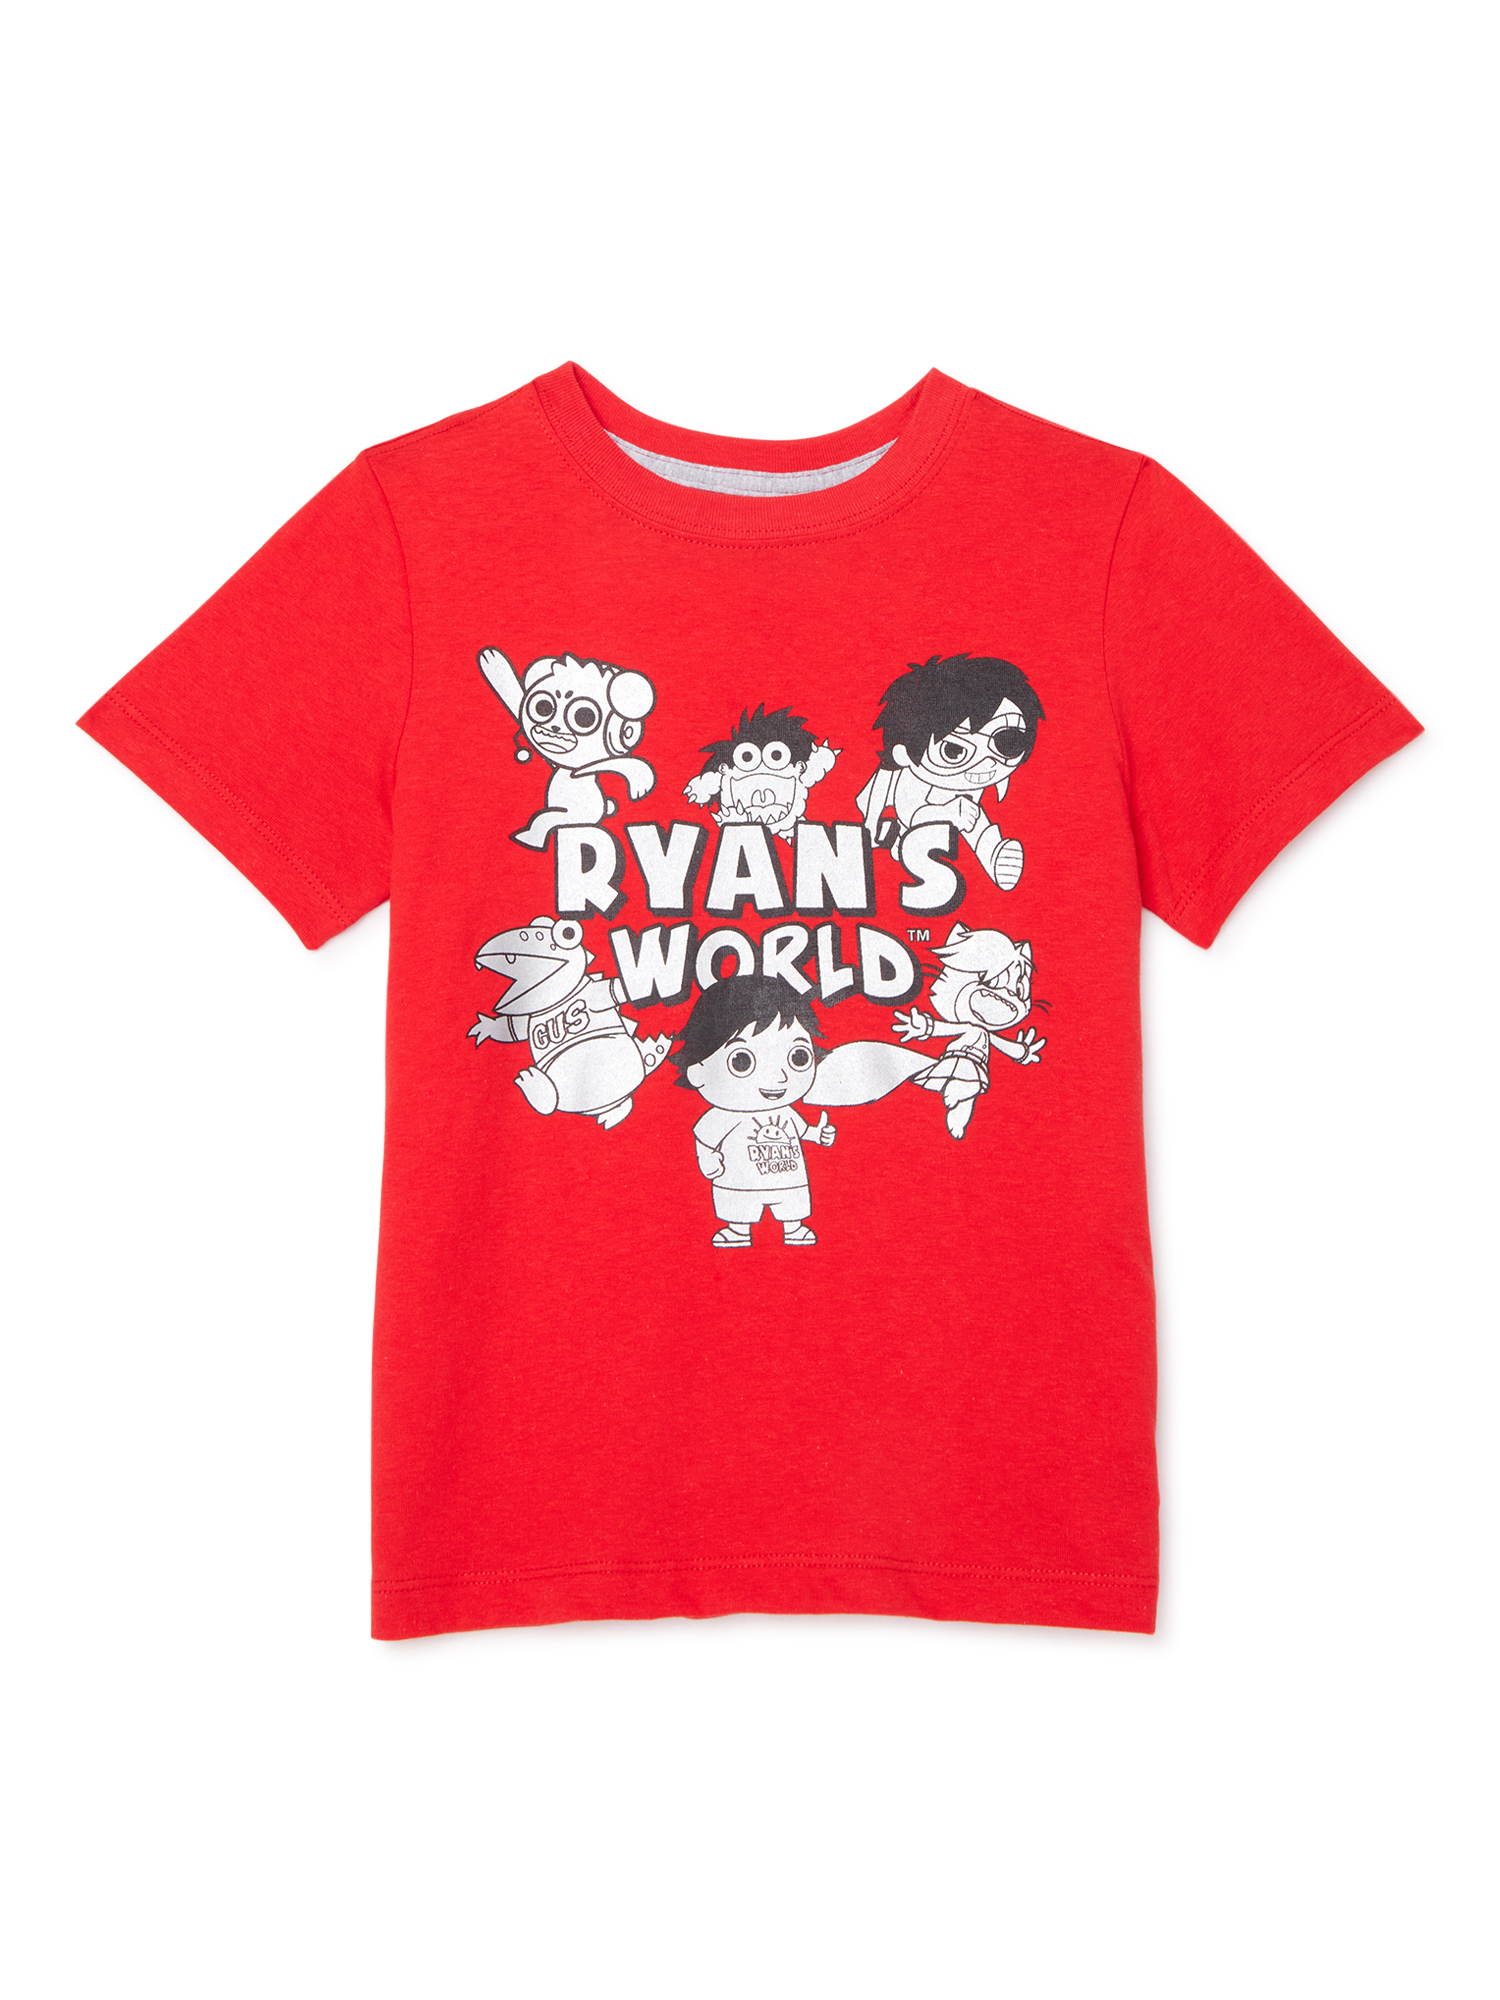 Ryan's World Boys Short Sleeve Graphic T-Shirts, 3 Pack Sizes 4-8 - image 3 of 7